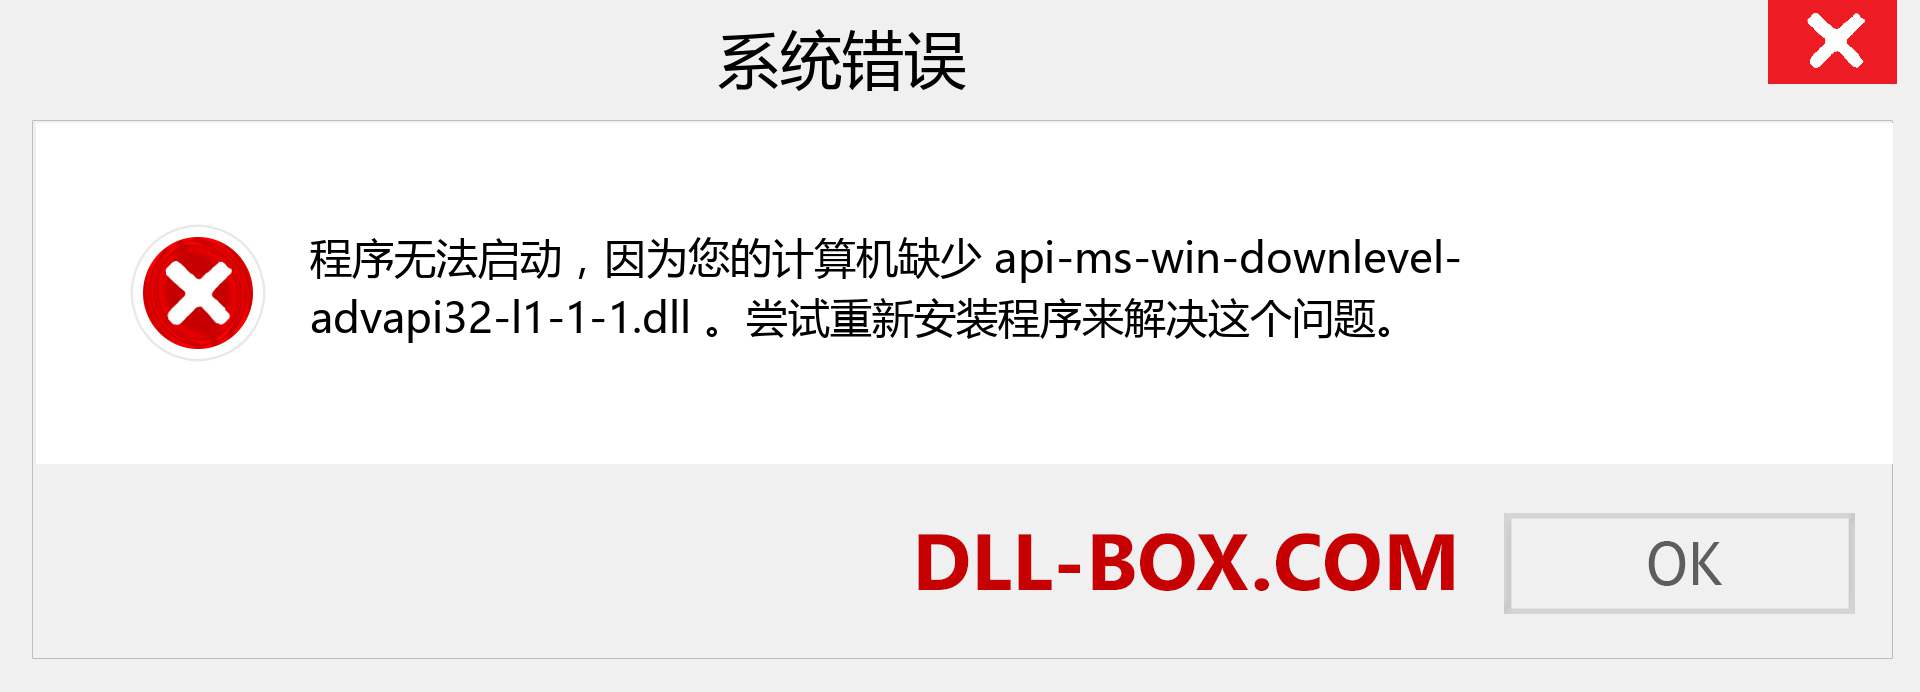 api-ms-win-downlevel-advapi32-l1-1-1.dll 文件丢失？。 适用于 Windows 7、8、10 的下载 - 修复 Windows、照片、图像上的 api-ms-win-downlevel-advapi32-l1-1-1 dll 丢失错误